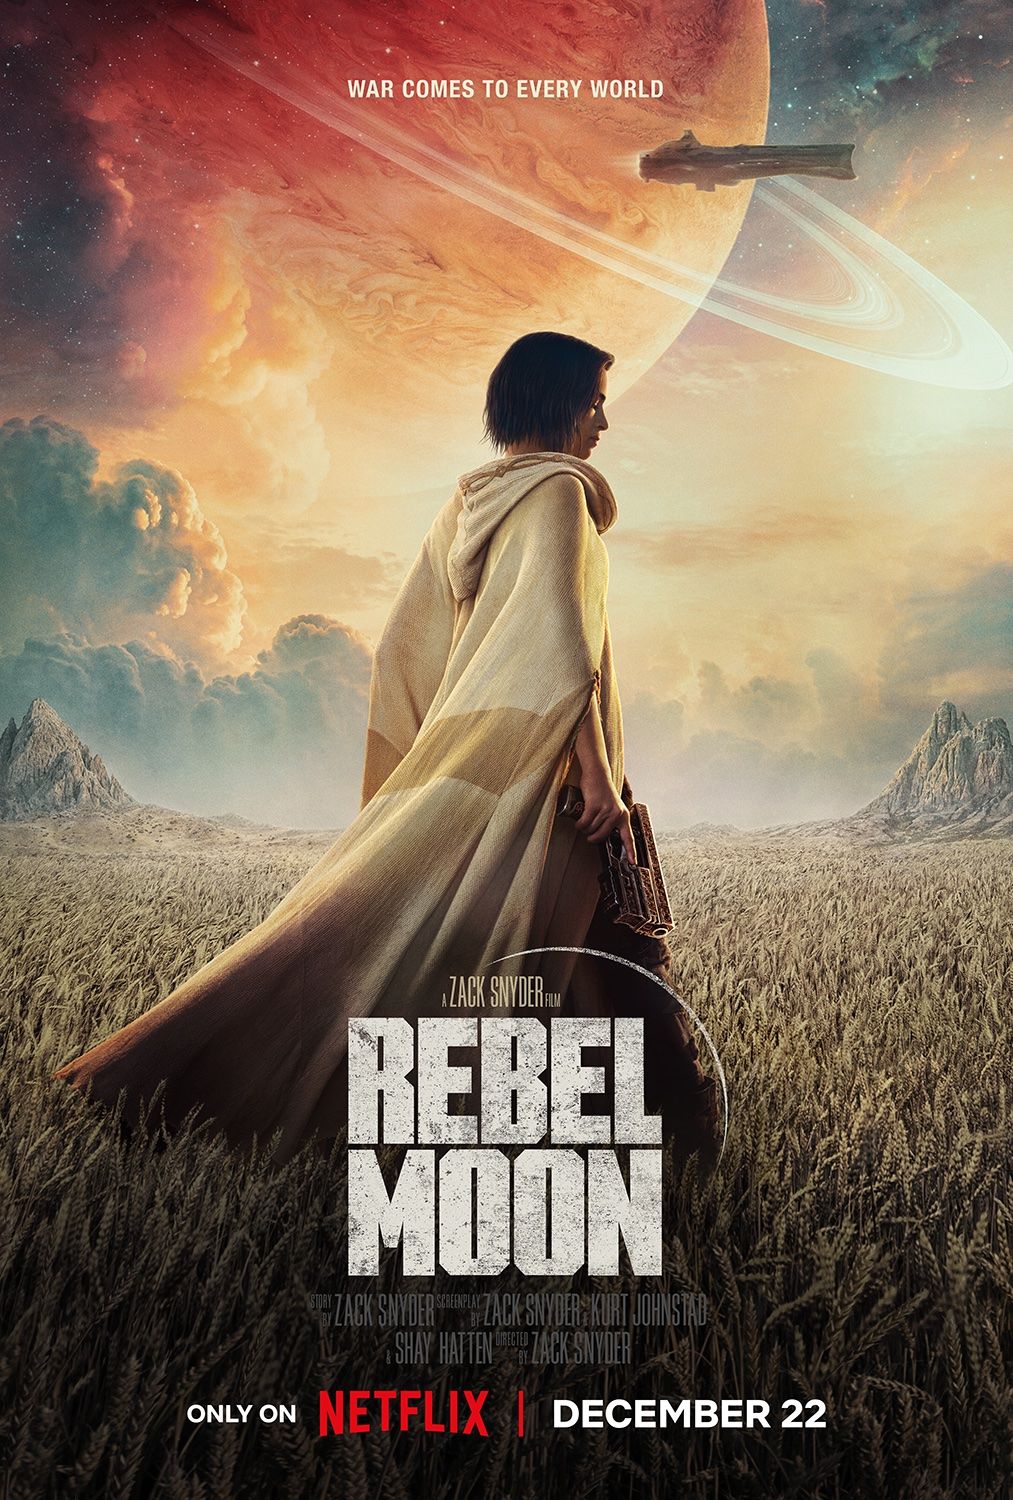 Rebel Moon' Trailer Reveals Zack Snyder's Take on Space Operas & Lightsabers